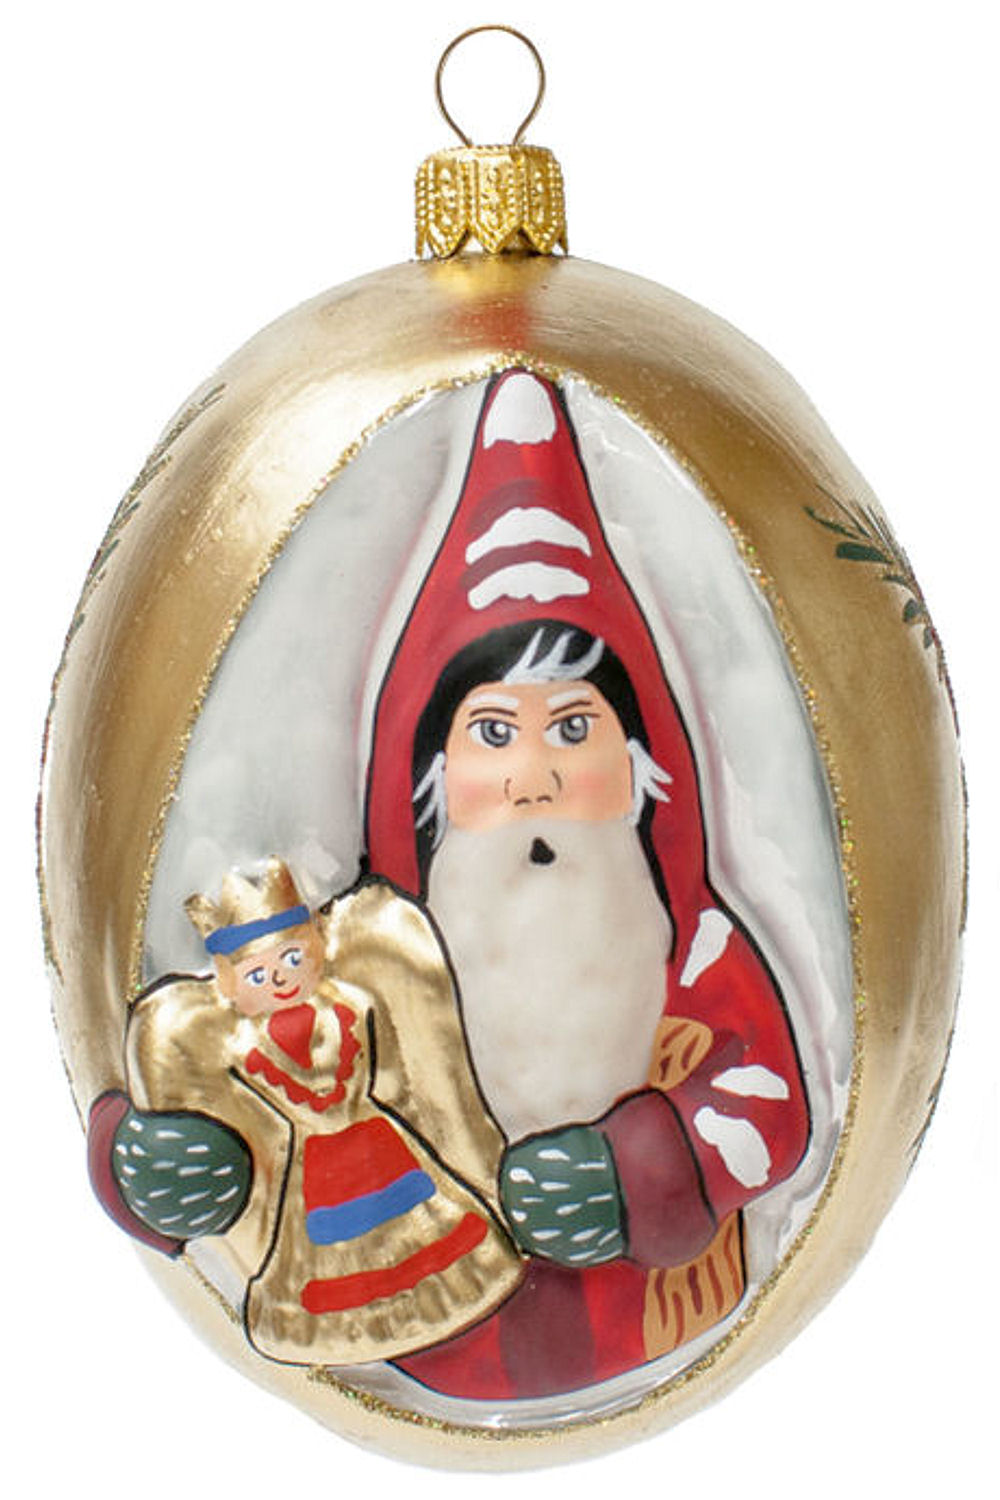 “Jingle Ball” Nürnberg “Rauschgoldengel” Santa